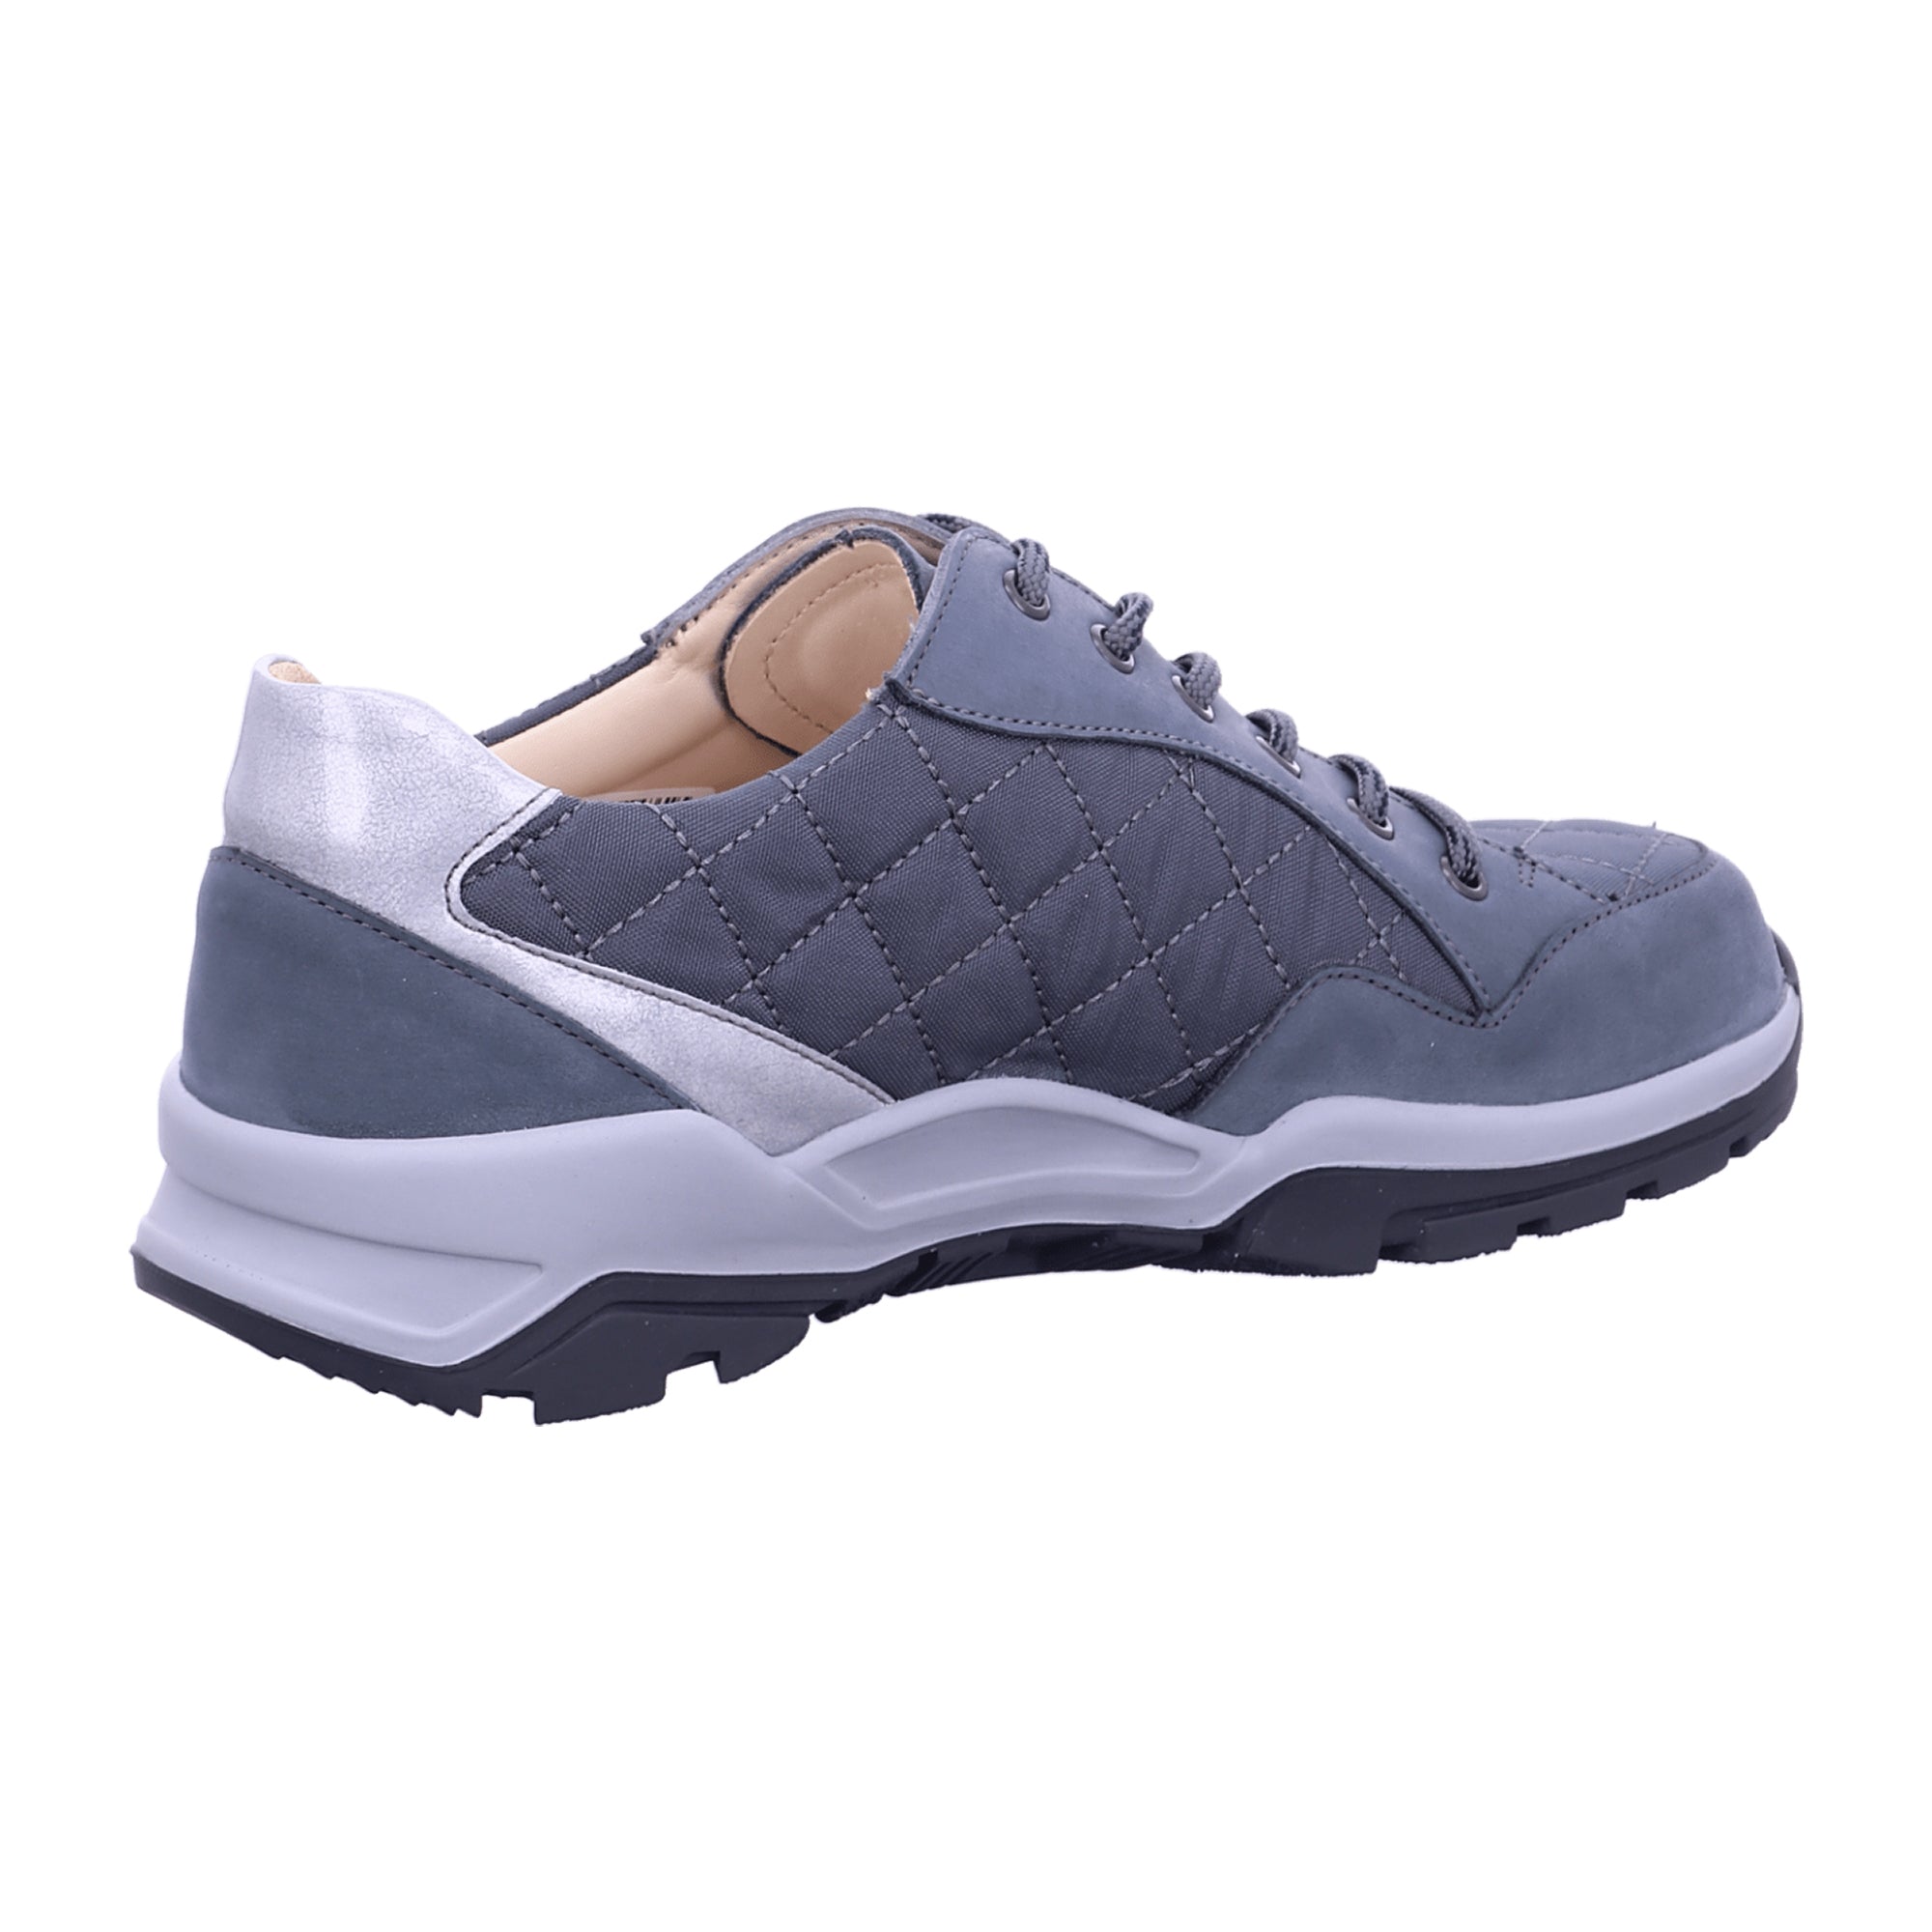 Finn Comfort Tessin Women's Comfort Shoes - Stylish Grey